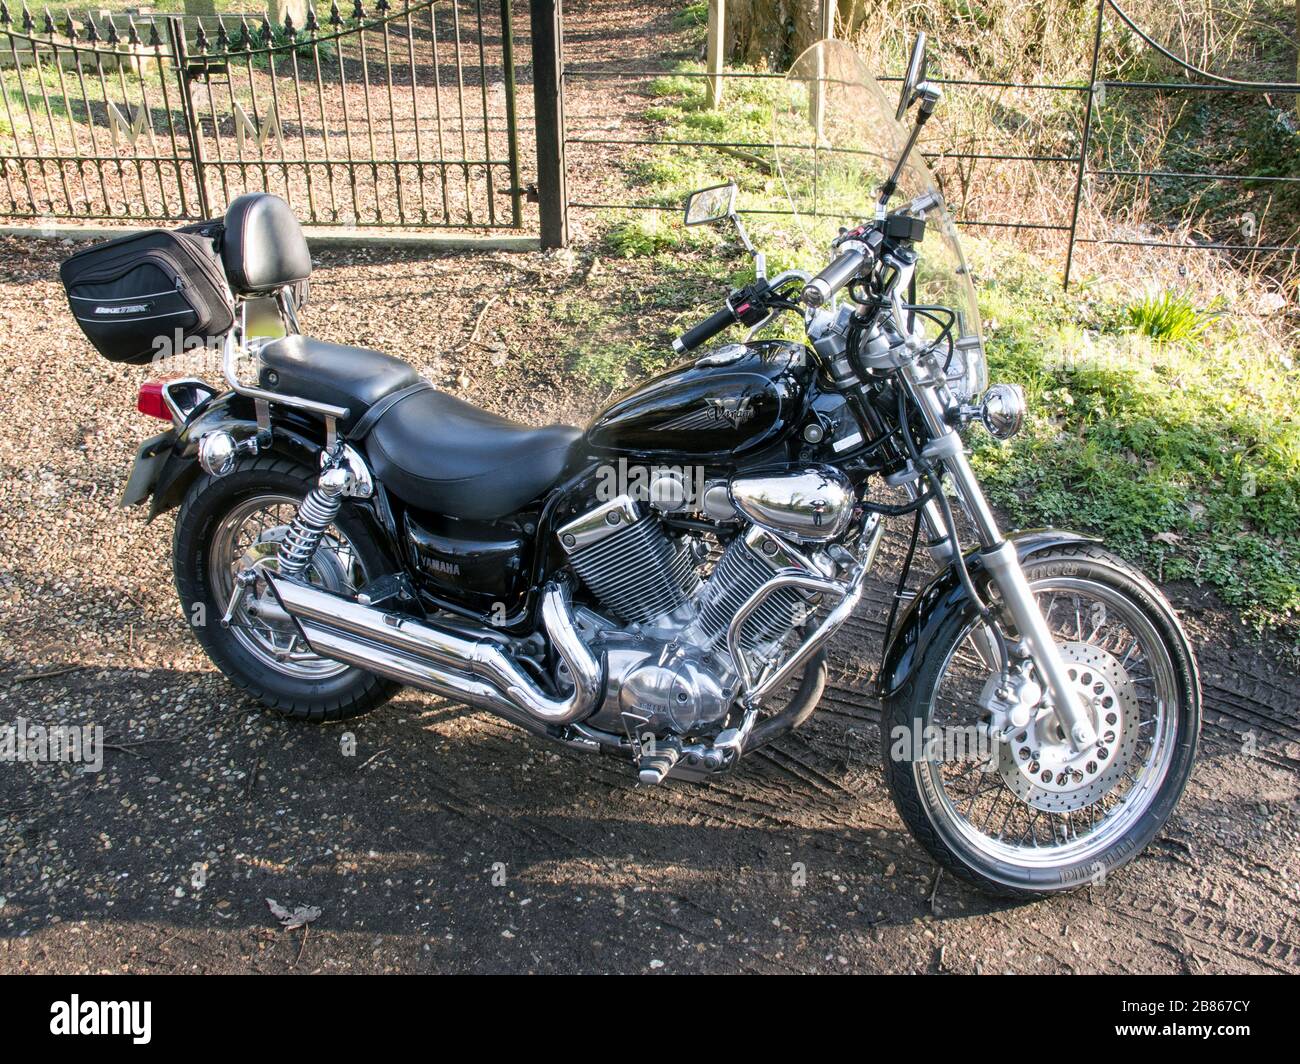 Yamaha virago motorcycle motorbike hi-res stock photography and images -  Alamy